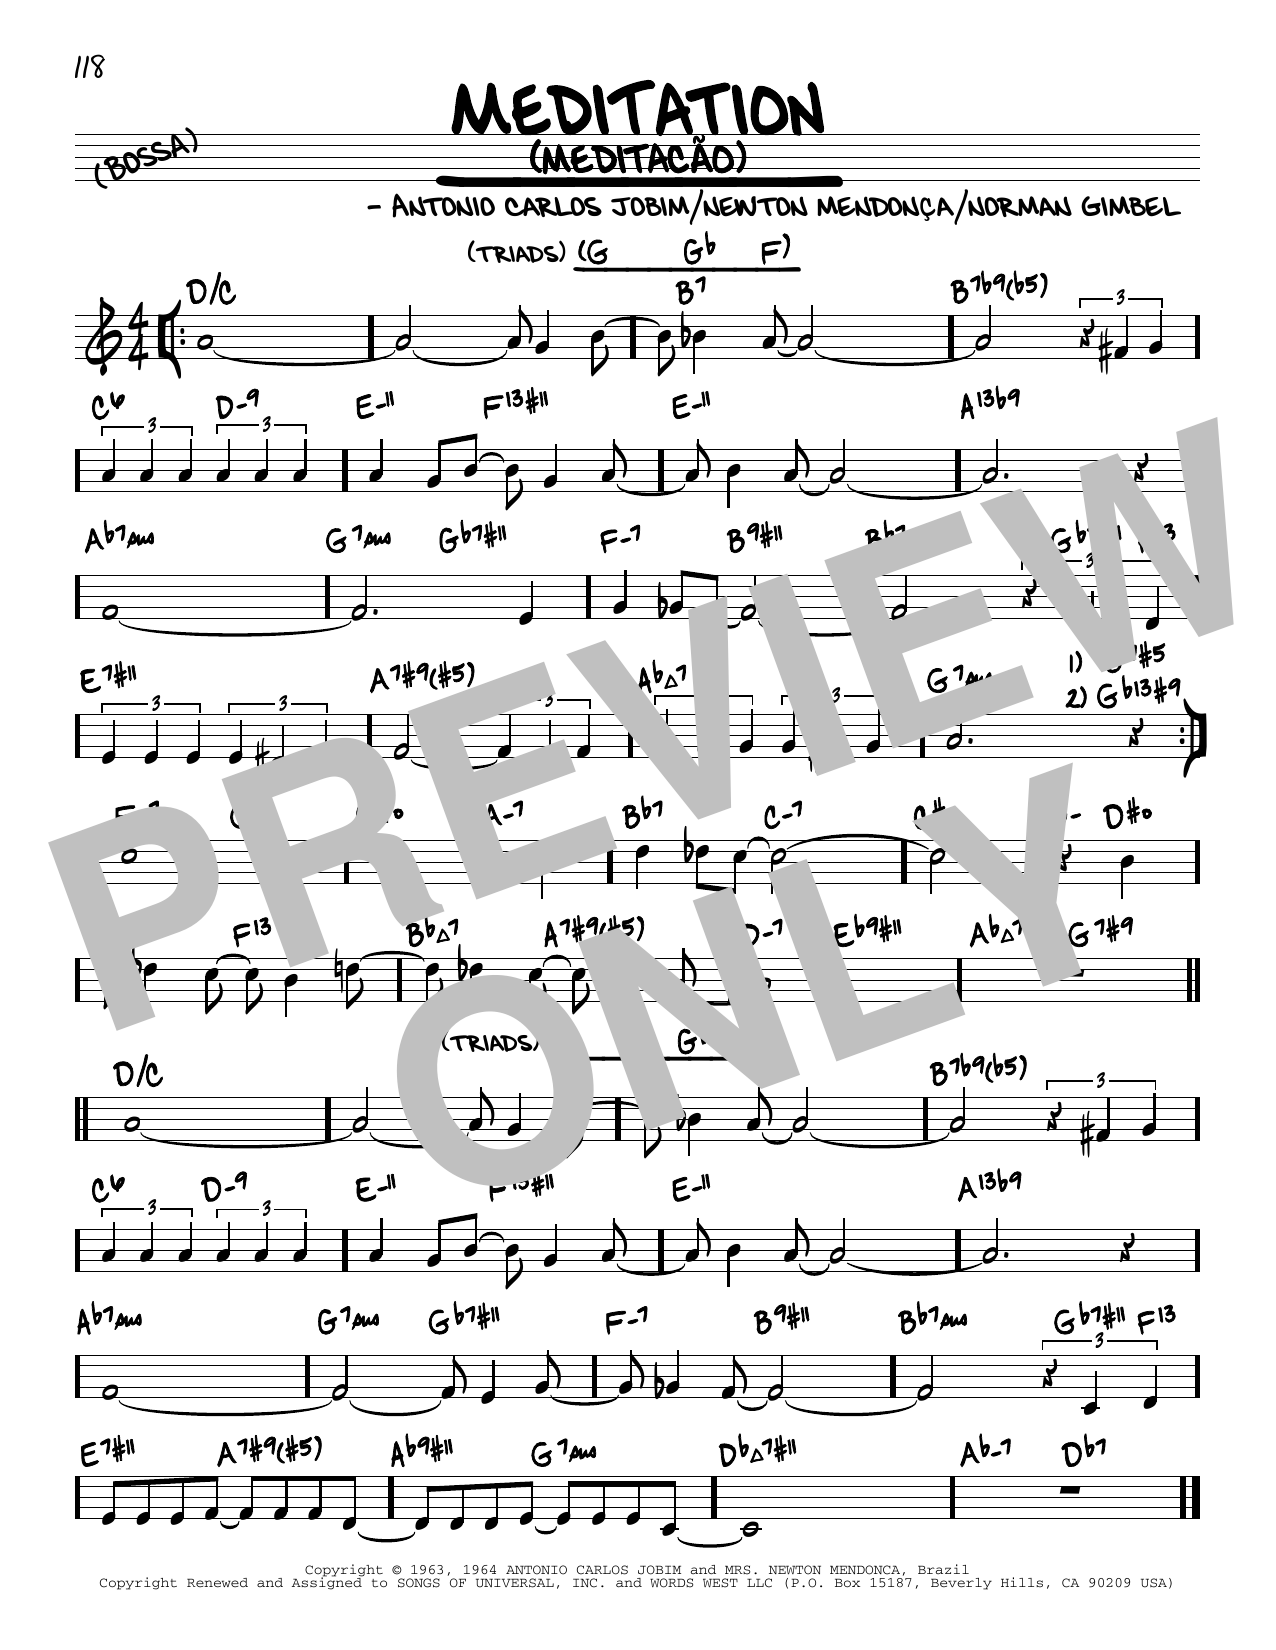 Antonio Carlos Jobim Meditation (Meditacao) (arr. David Hazeltine) Sheet Music Notes & Chords for Real Book – Enhanced Chords - Download or Print PDF